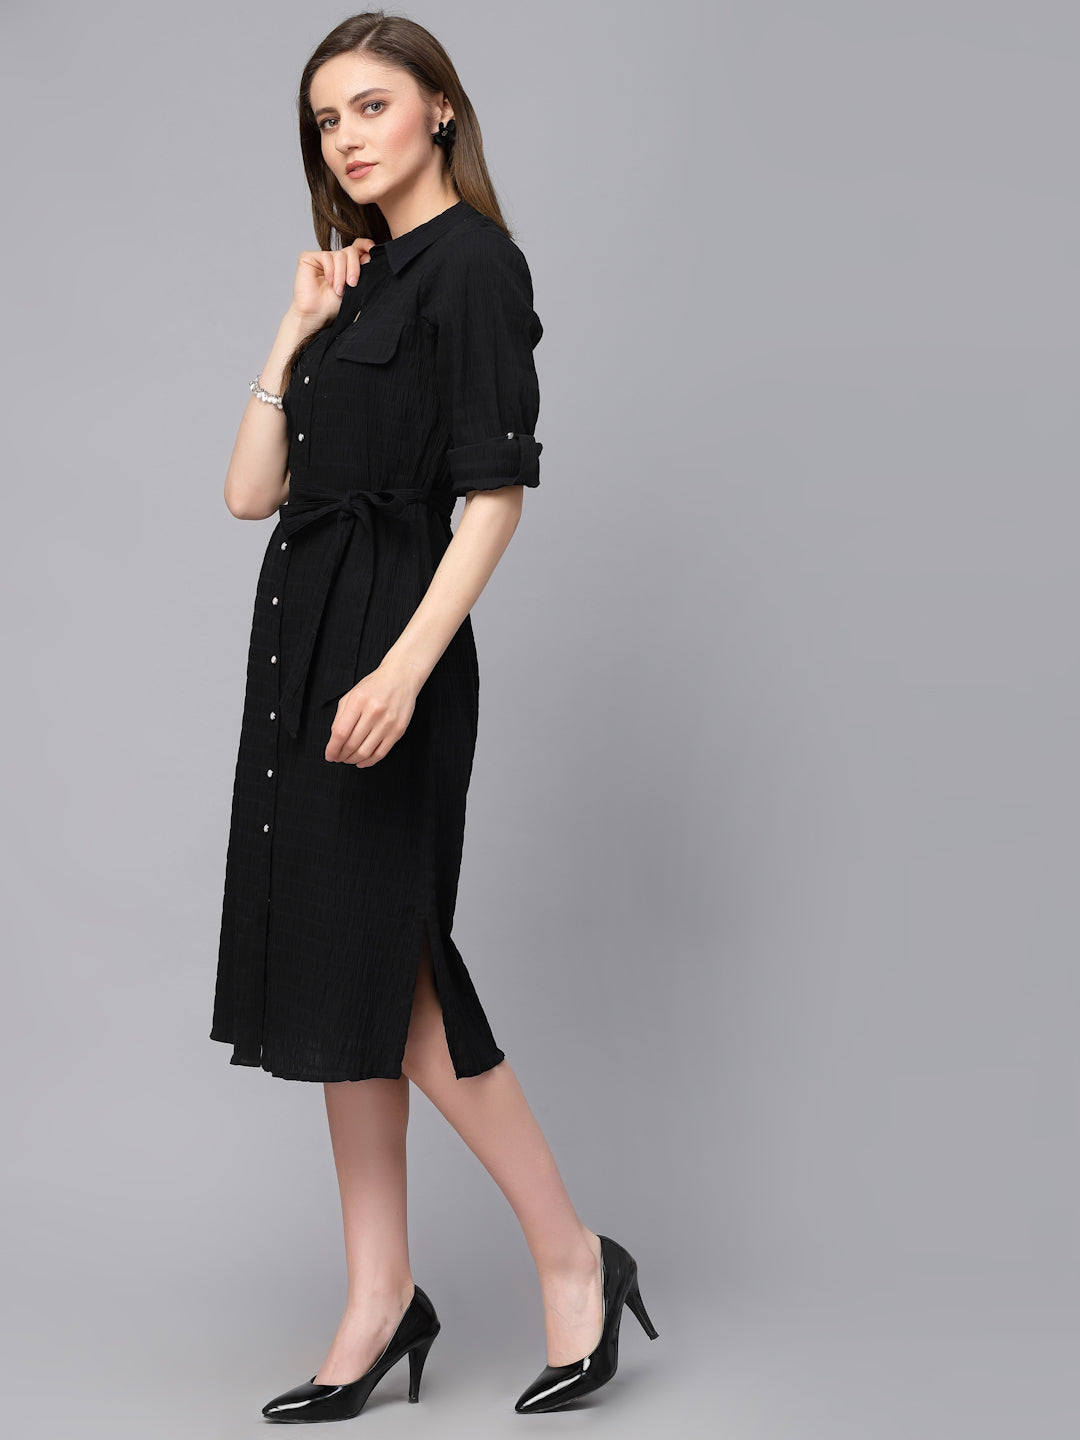 Gipsy Black Textured Cotton Dress